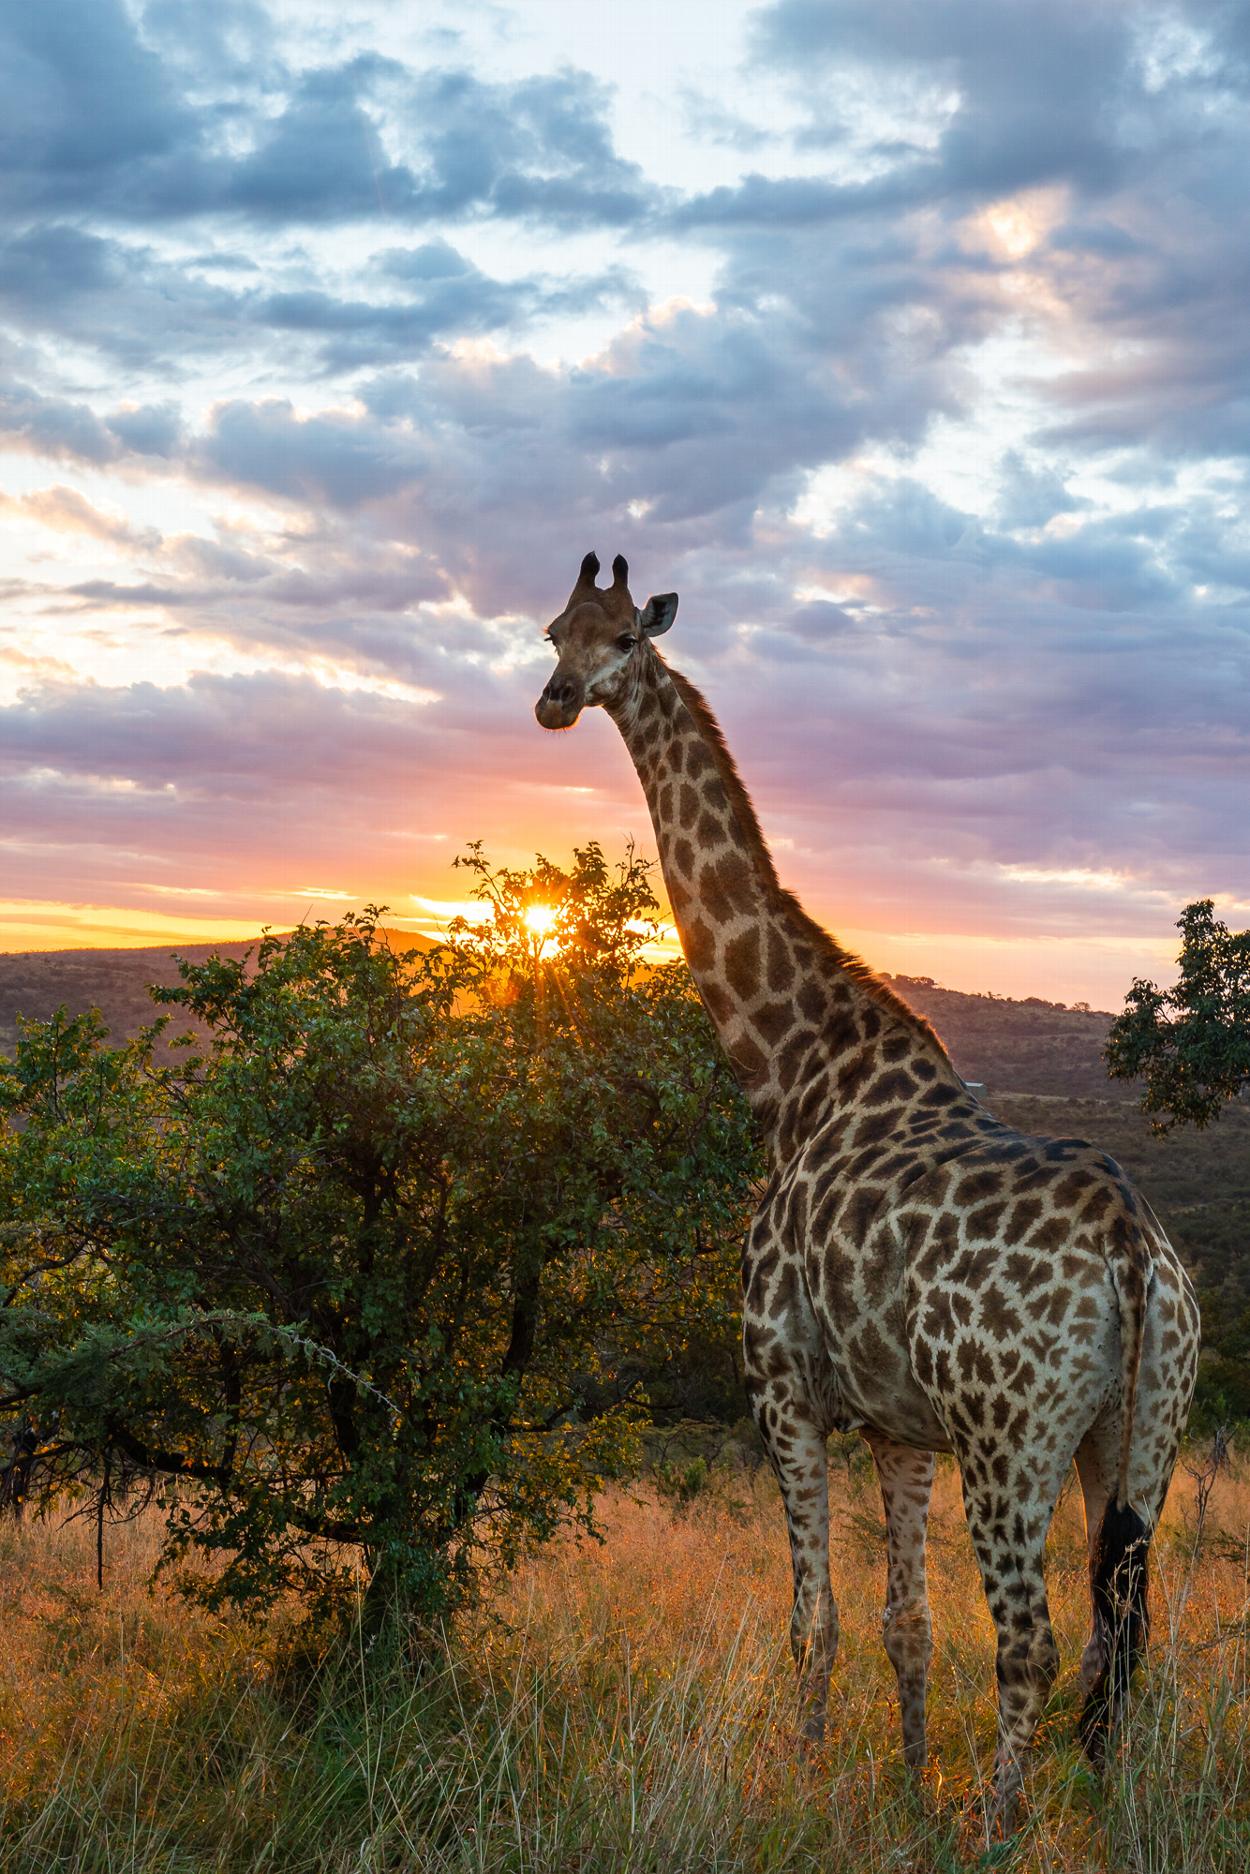 Wild giraffe in South Africa